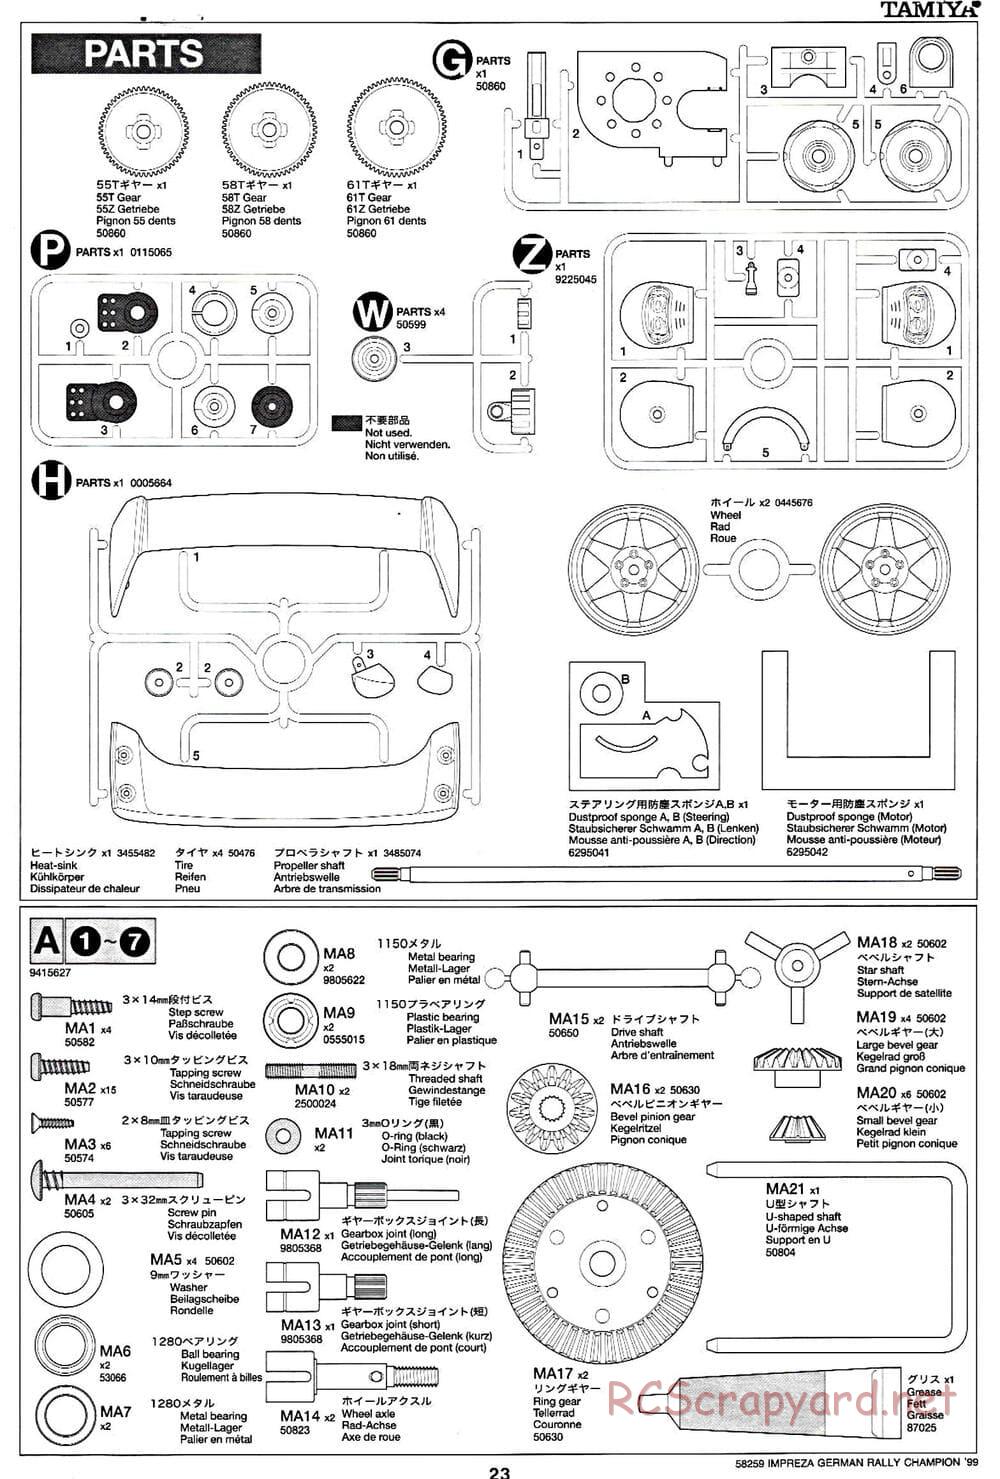 Tamiya - Subaru Impreza German Rally Champion 99 - TB-01 Chassis - Manual - Page 23